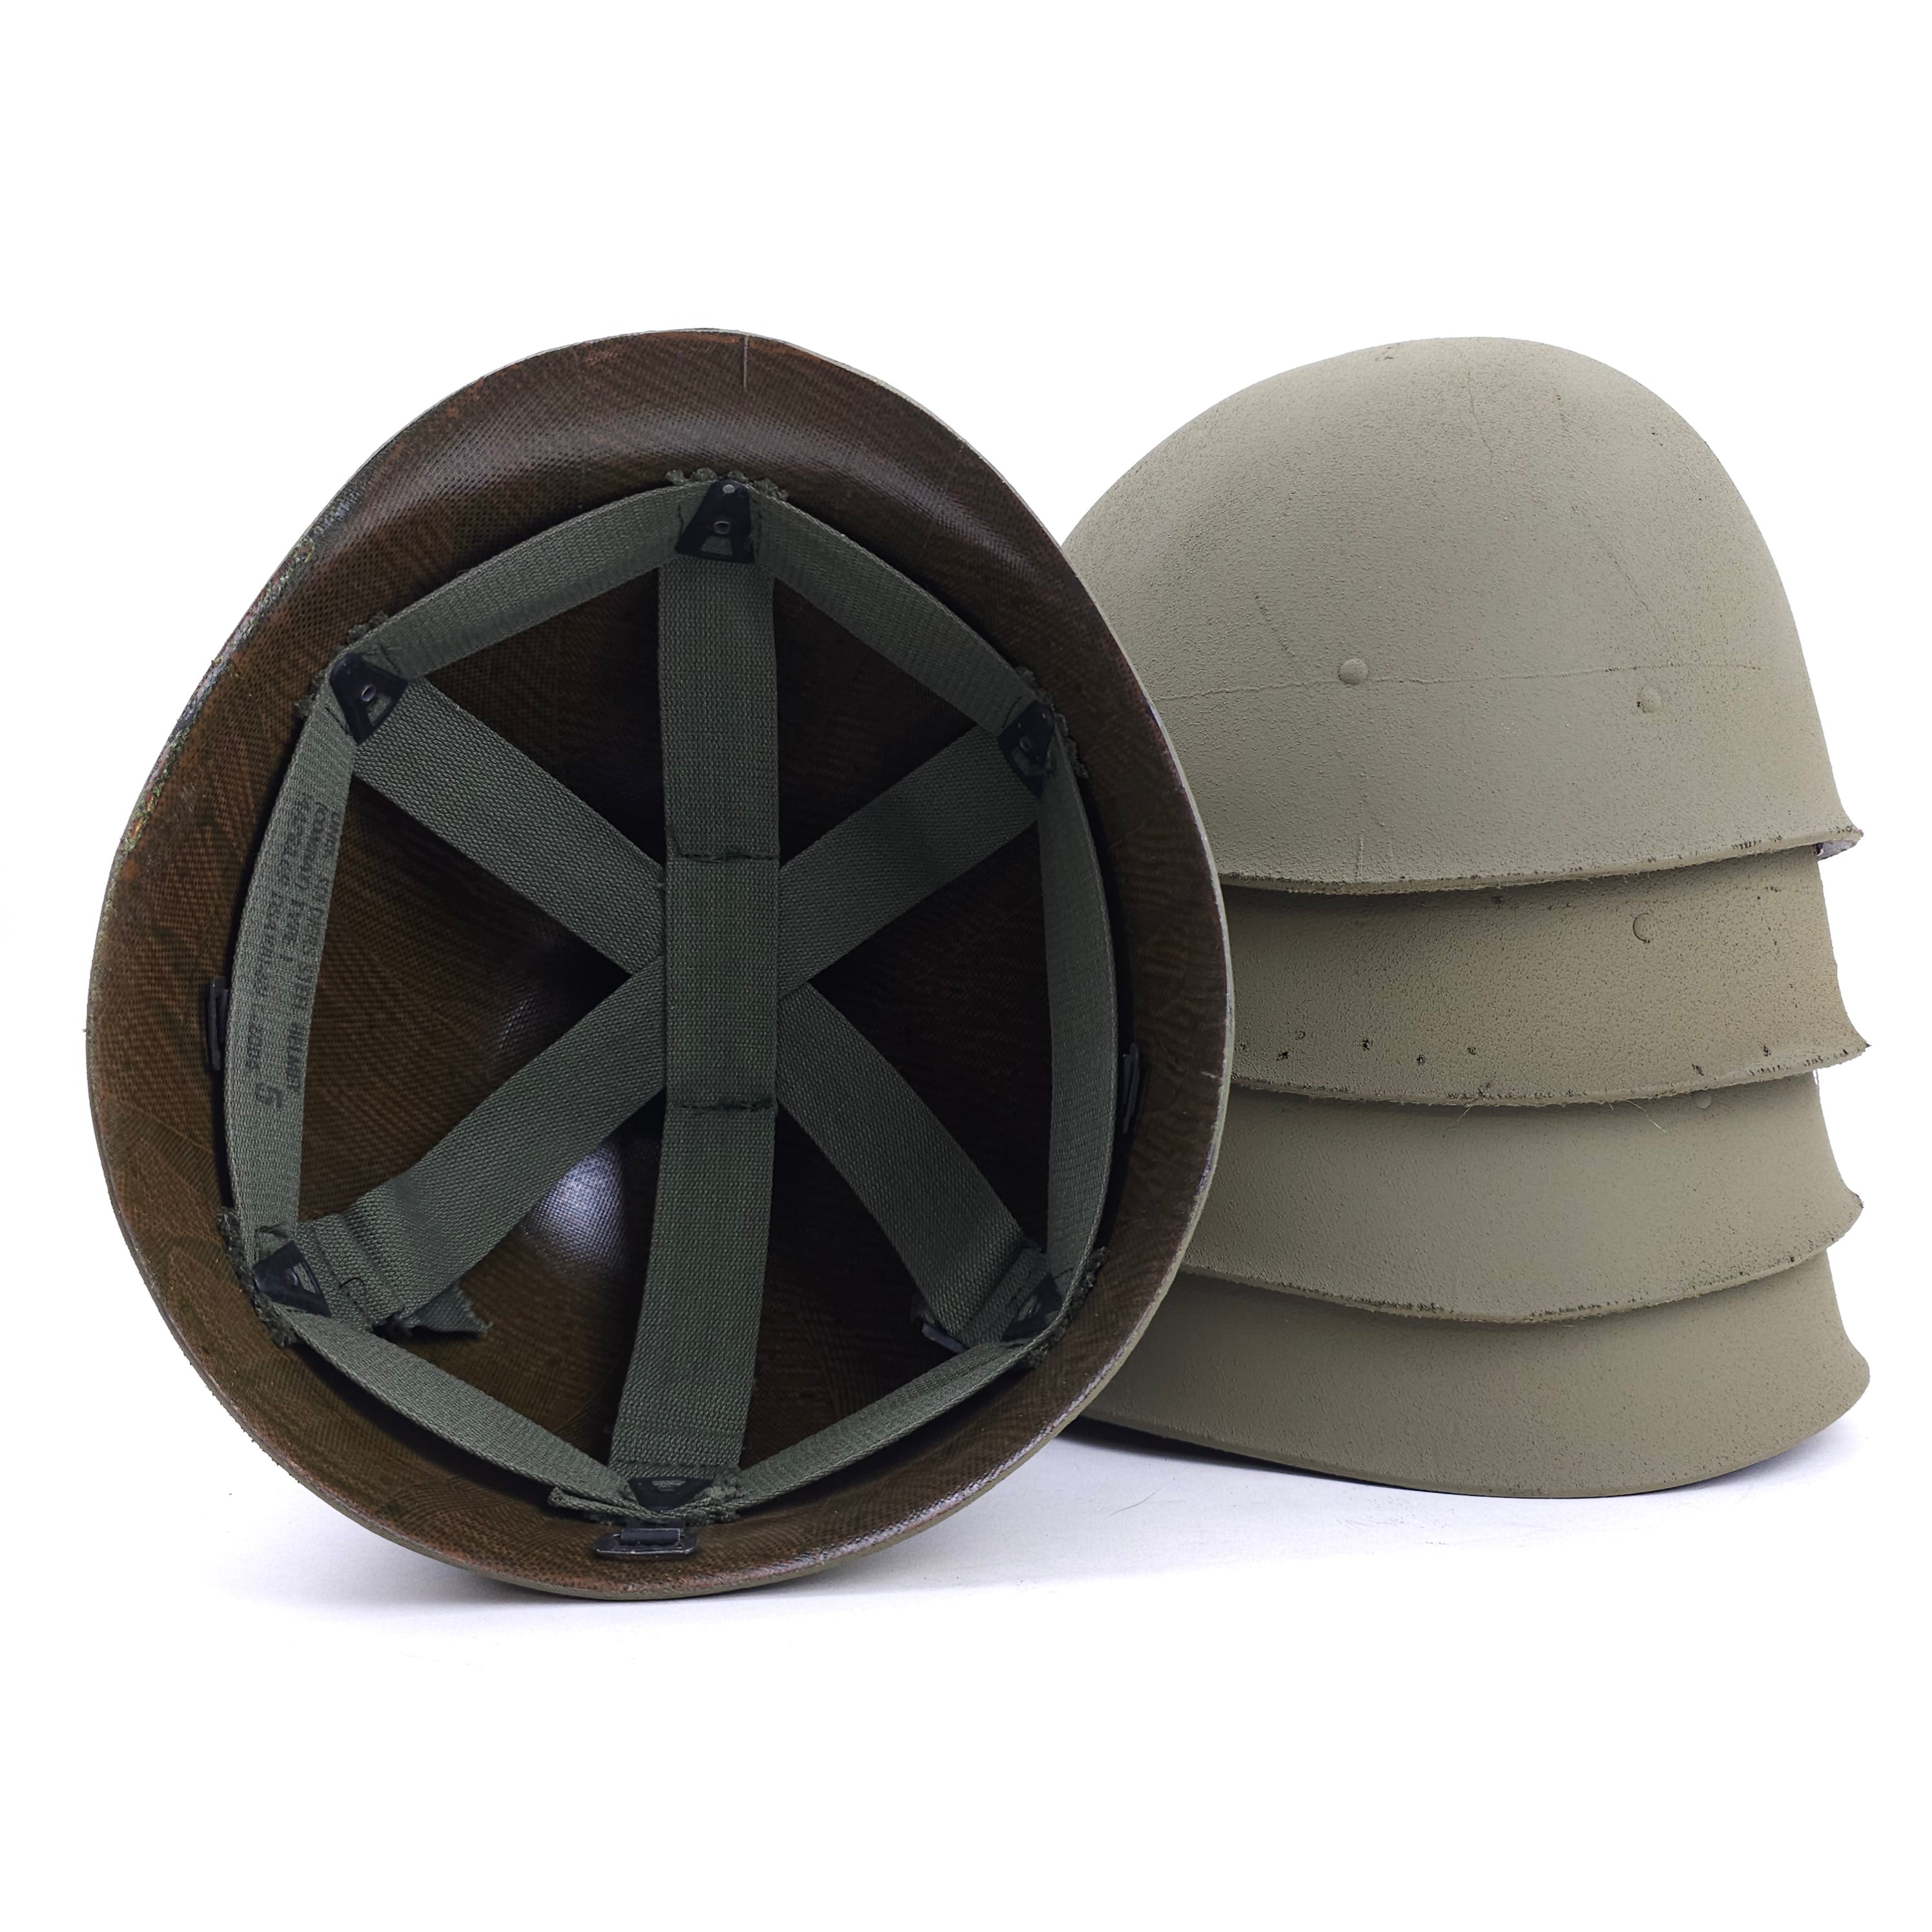 M1 Helmet Liner - Late Vietnam War - Repainted Original